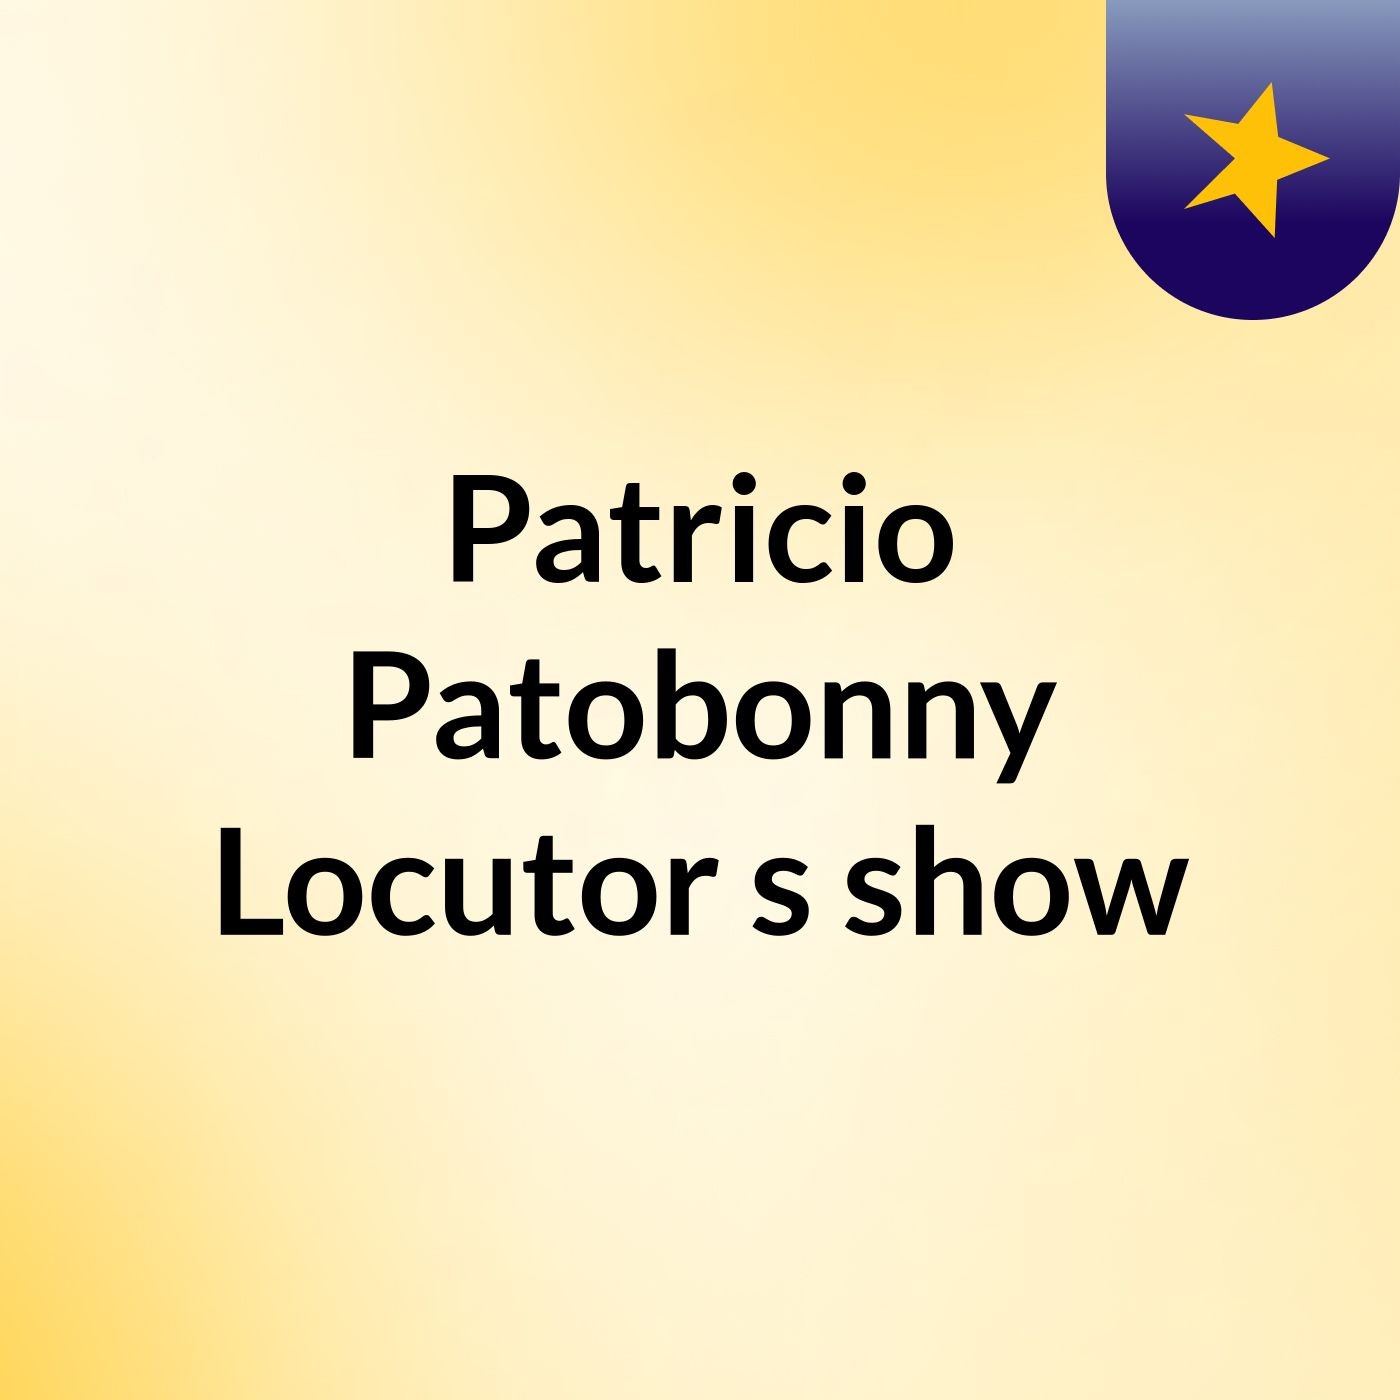 Patricio Patobonny Locutor's show